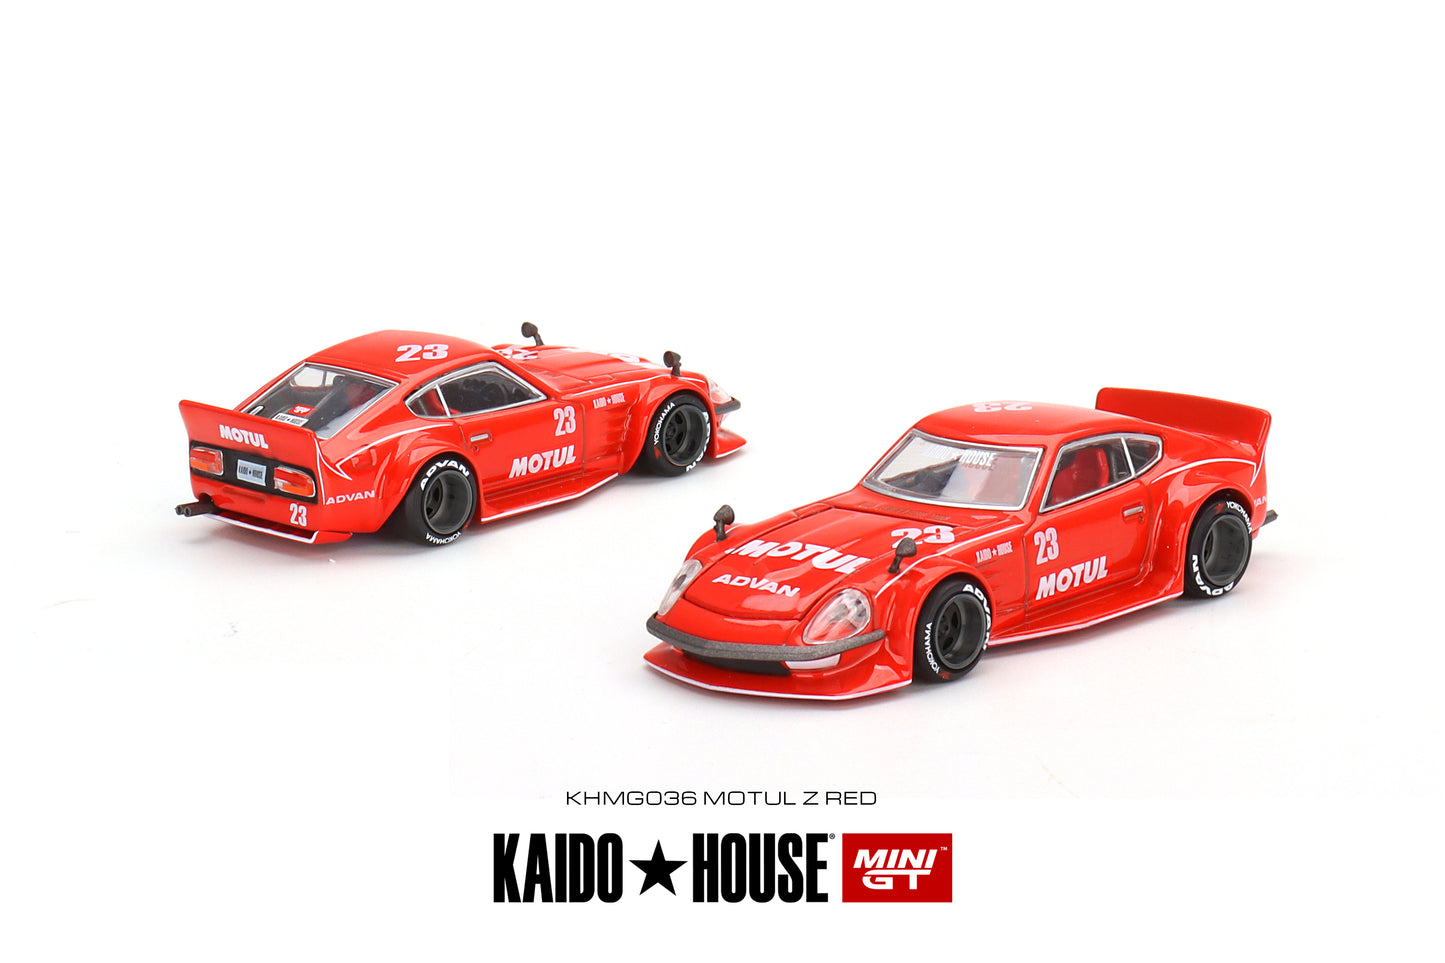 Mini GT x Kaido House 1/64 Nissan Fairlady Z Motul V2 - Red